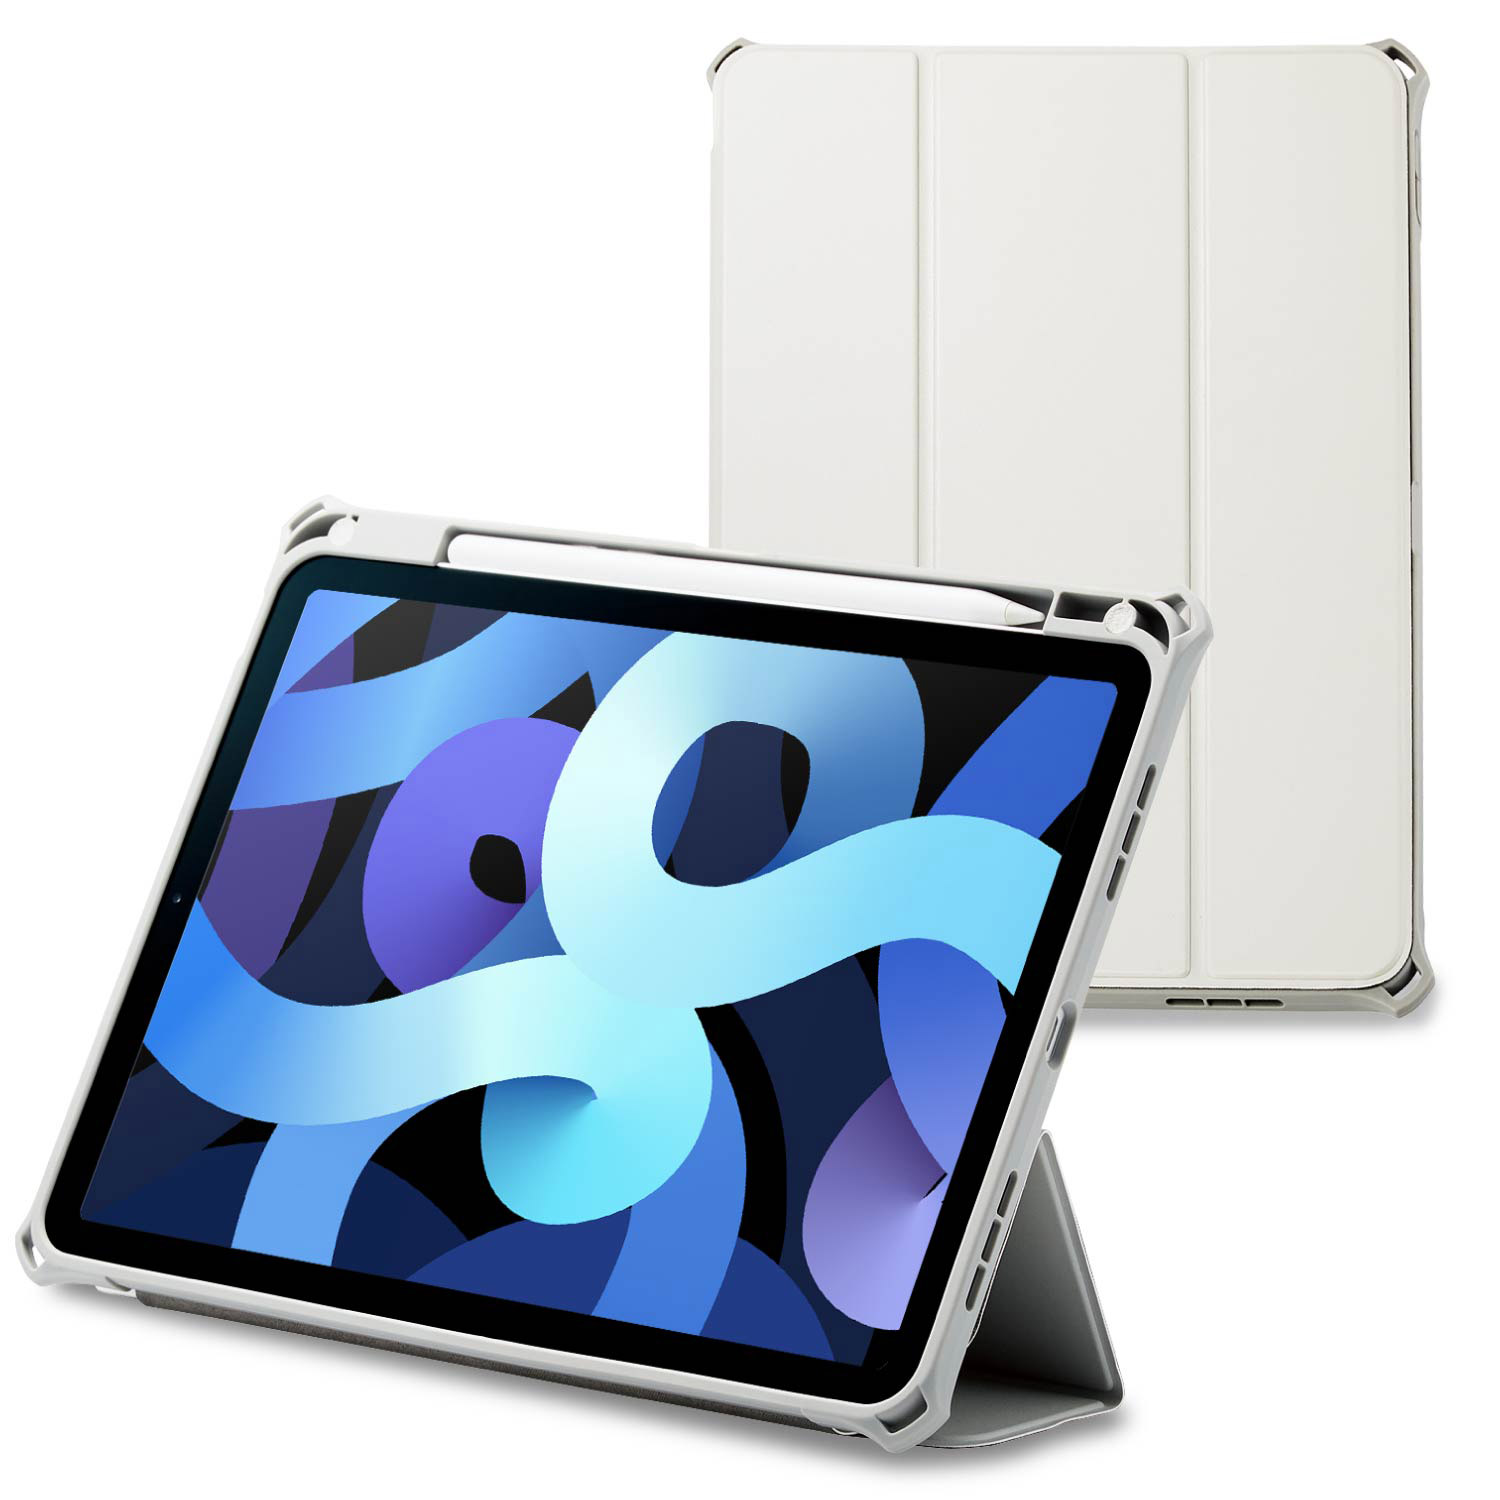 iPad air 16GB シルバー キーボード付き 管え52